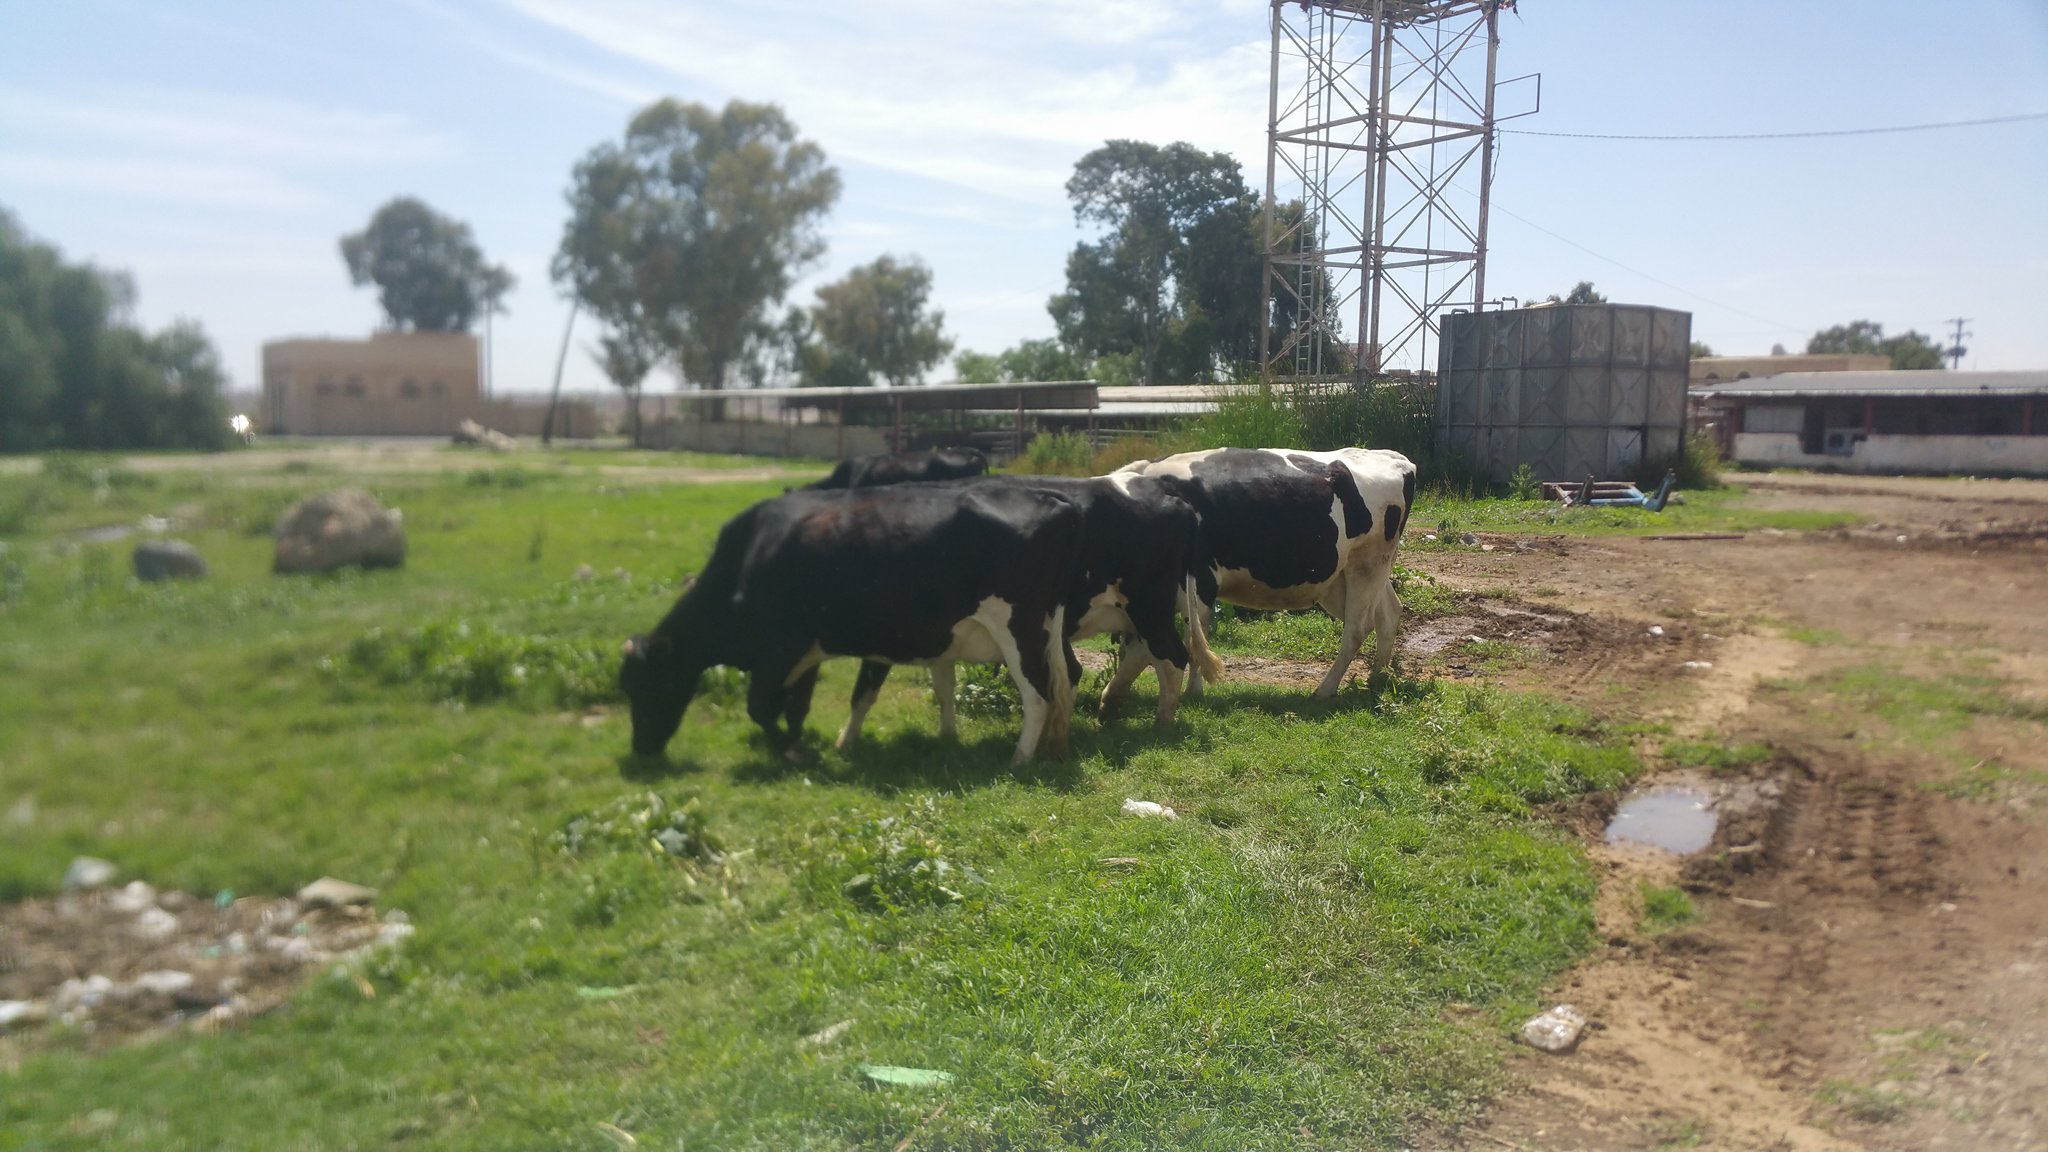 dhamar cows grazing outside farm 10 MAY 2018 OWAP AR Helall pic.jpg